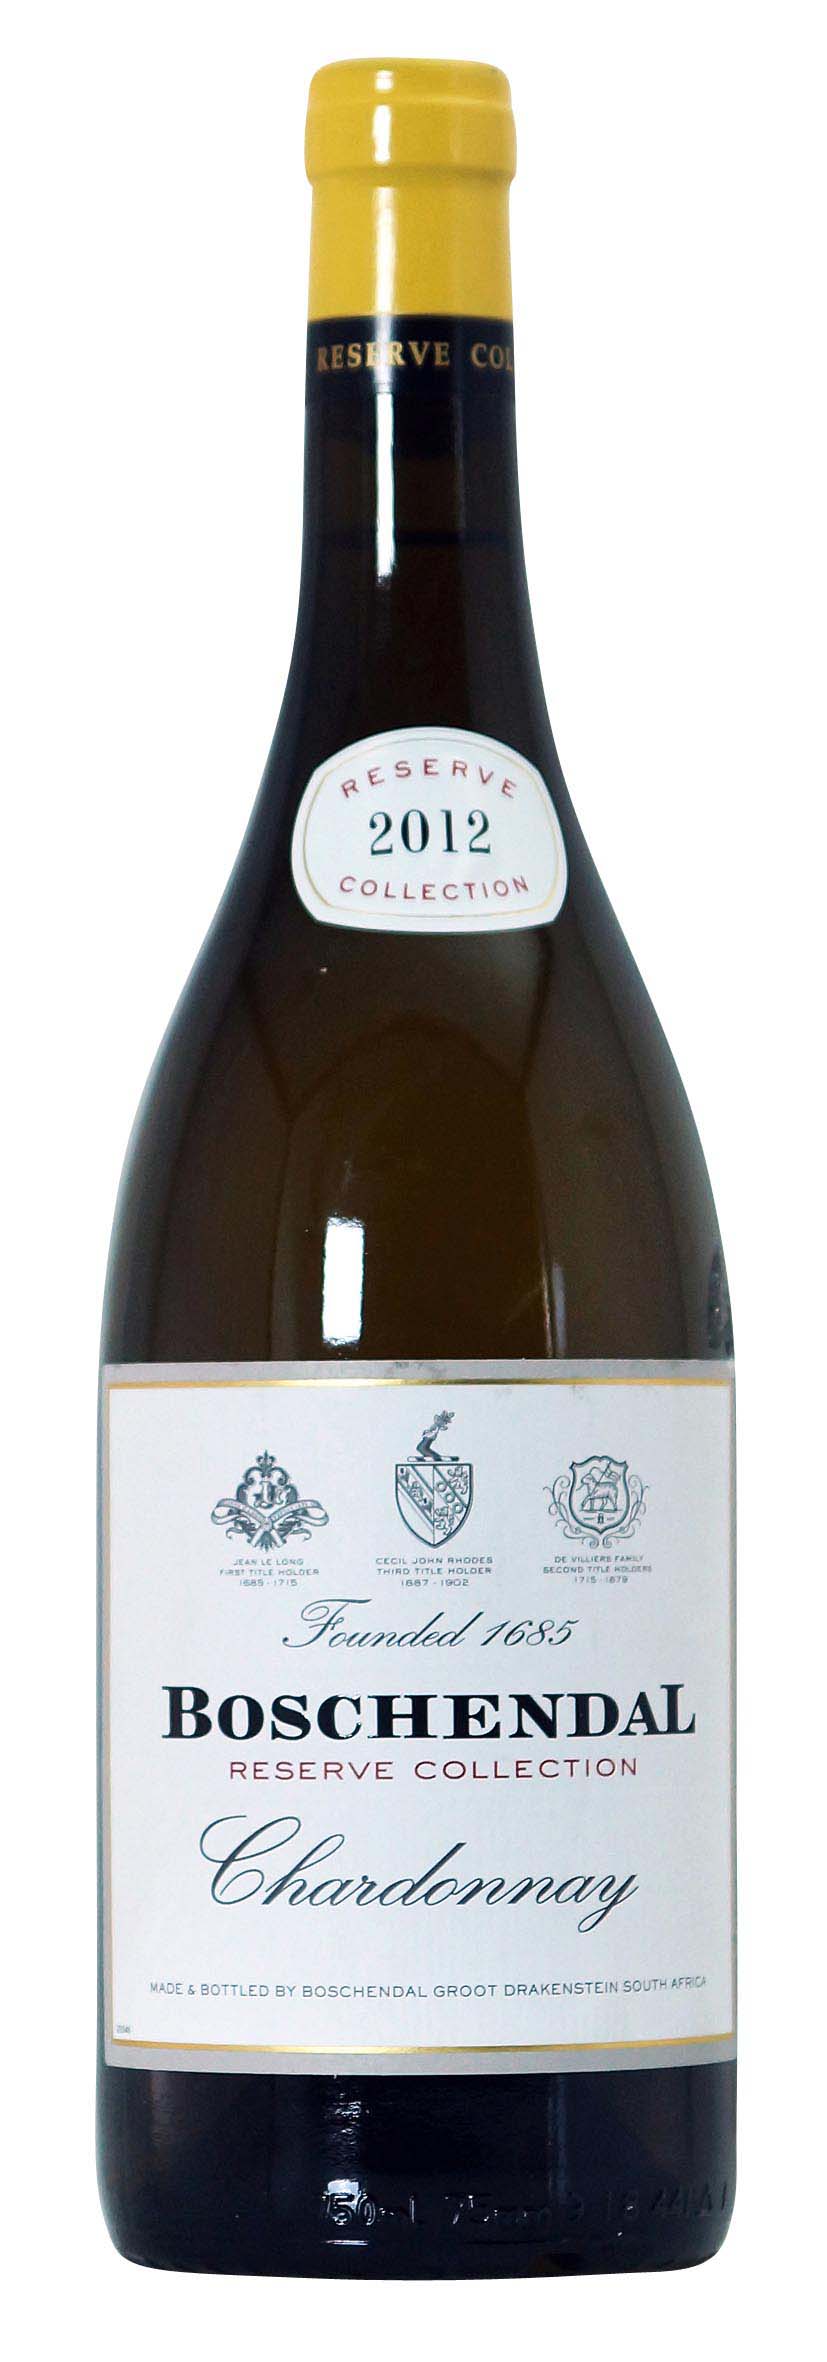 Boschendal Chardonnay Reserve 2012